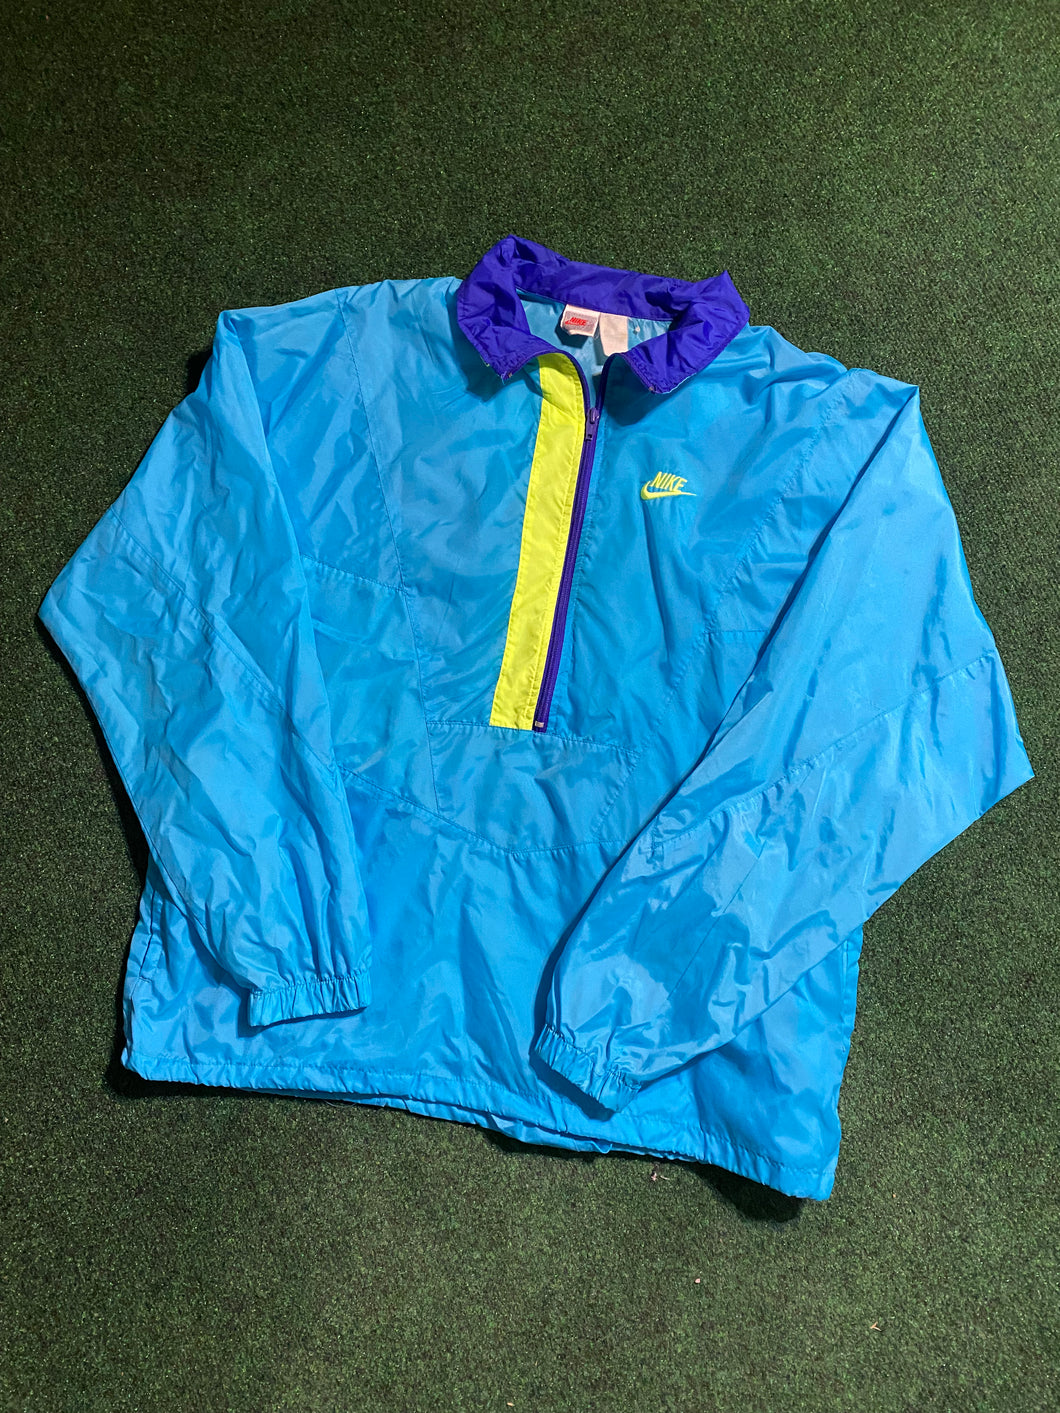 Vintage ‘90s Nike Color Blocked Lightweight Windbreaker Jacket - Large